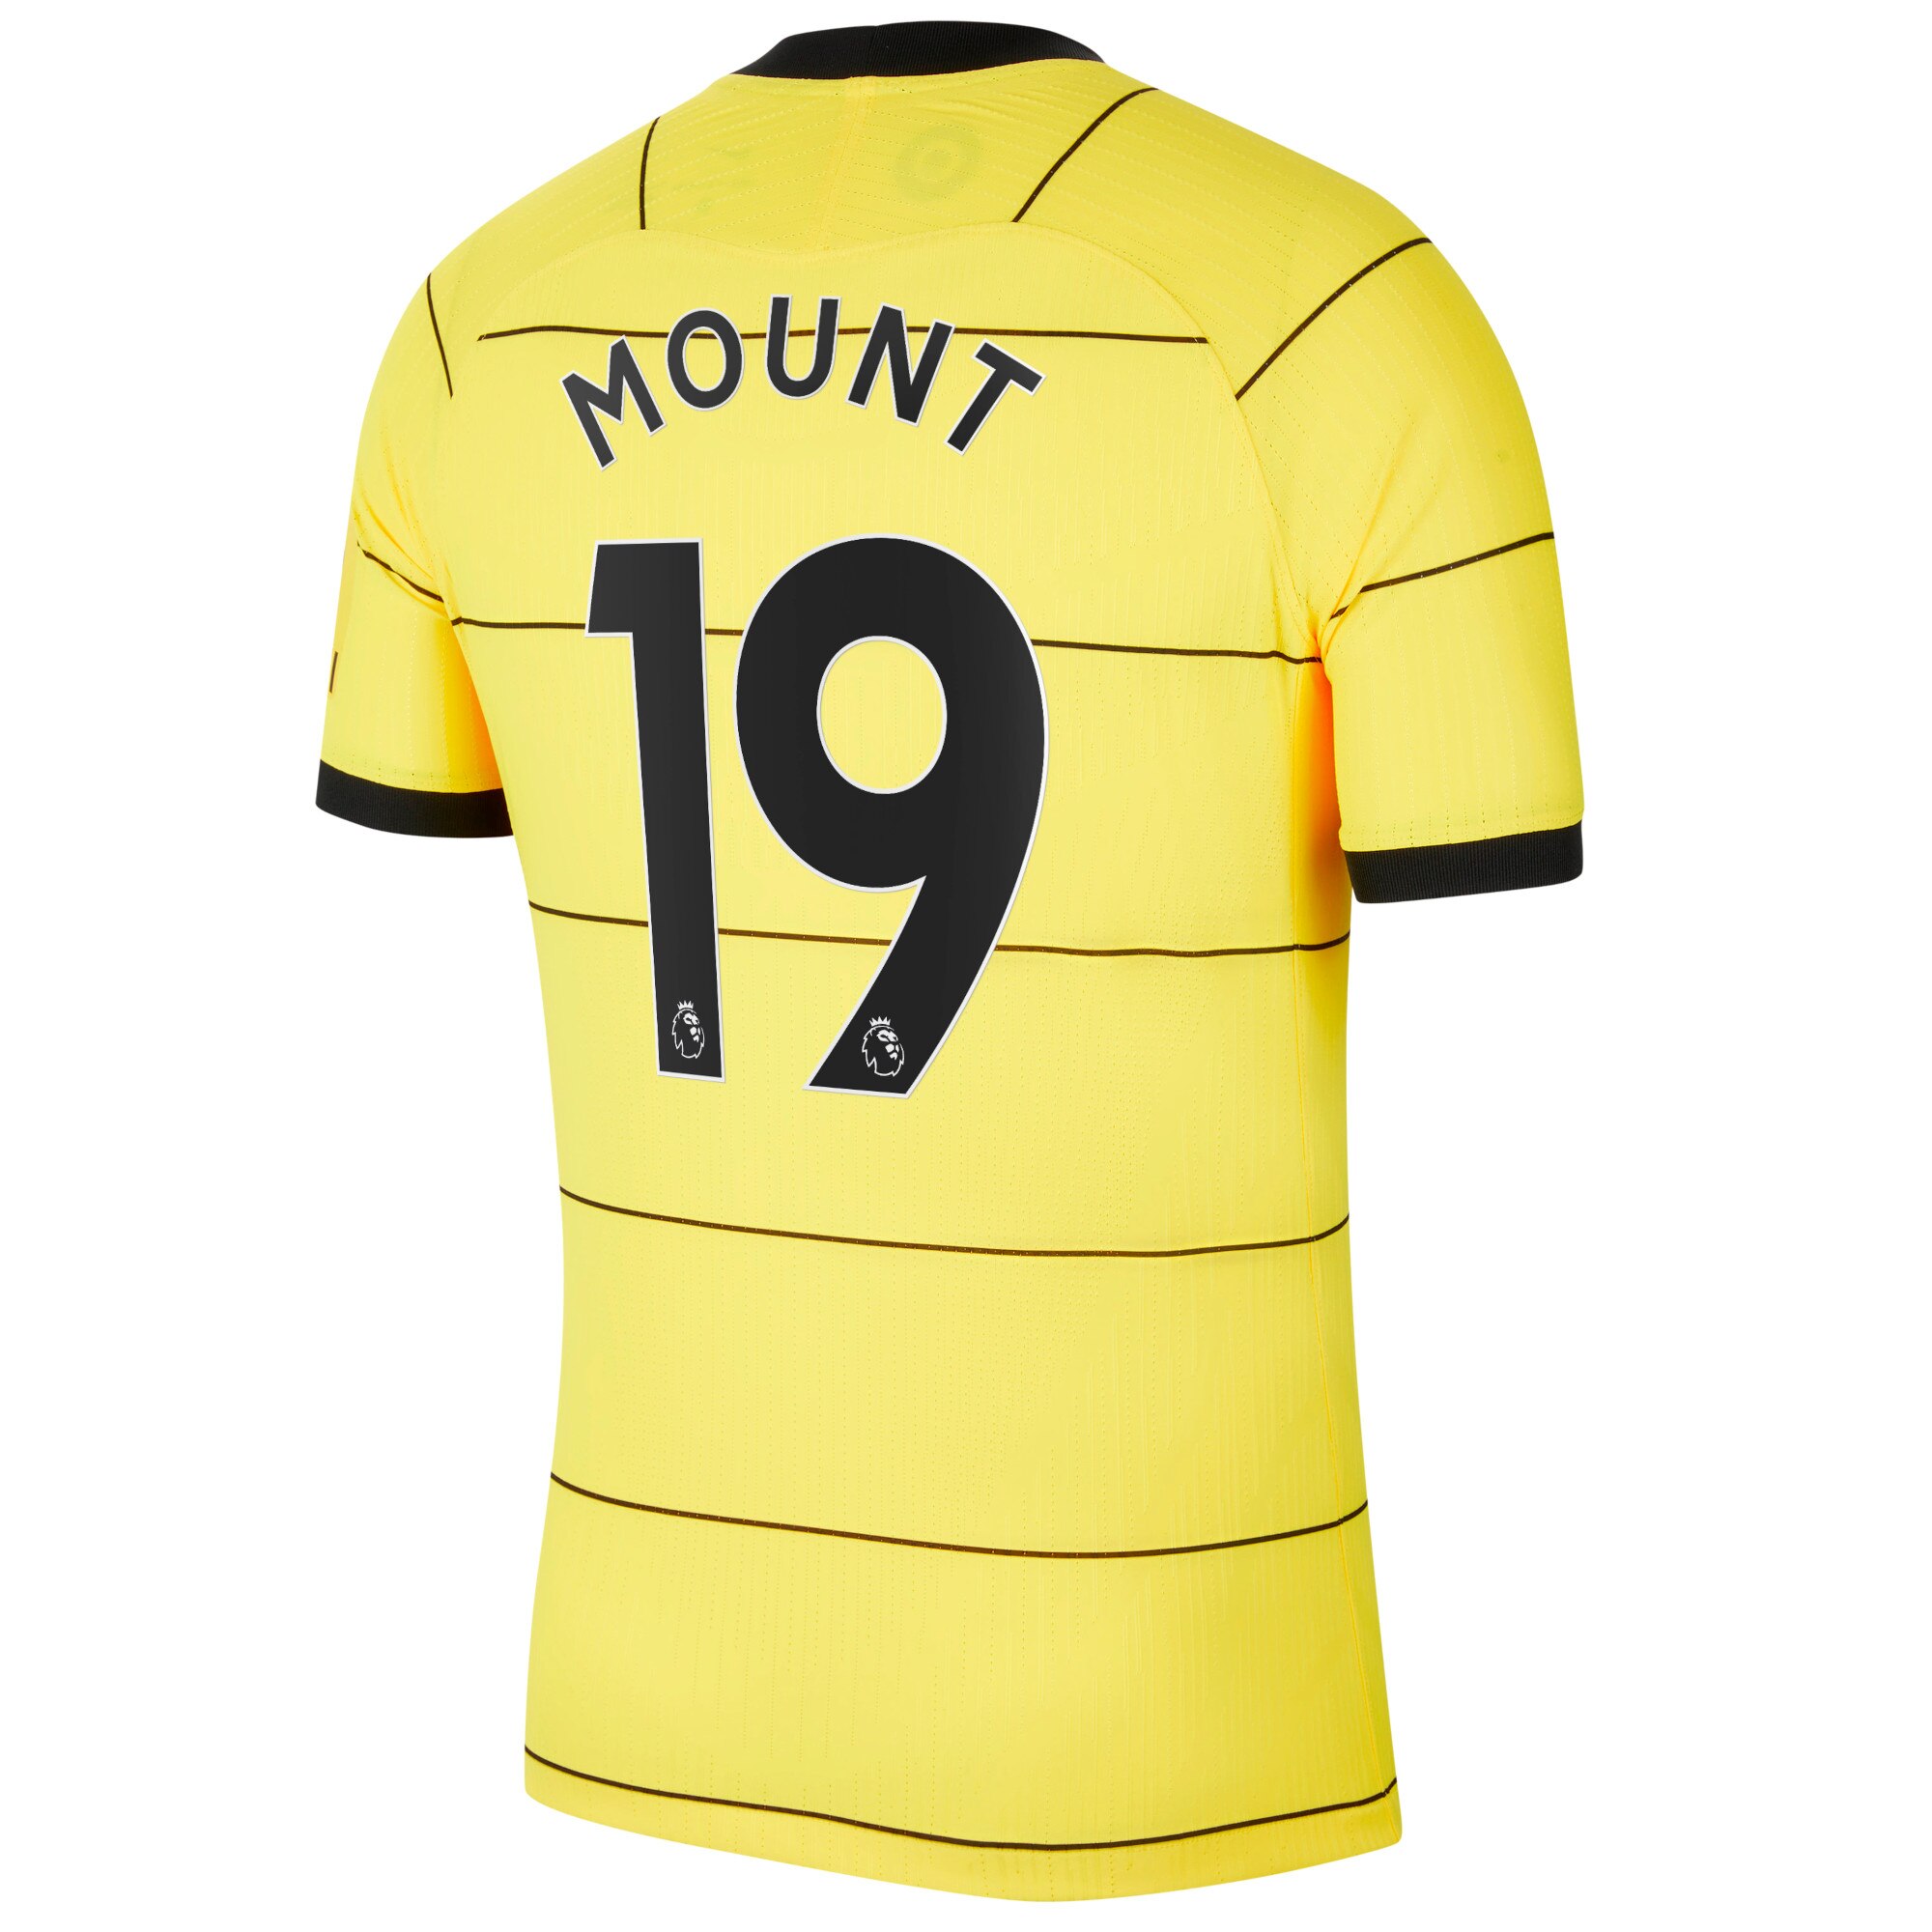 Chelsea Away Vapor Match Shirt 2021-22 with Mount 19 printing